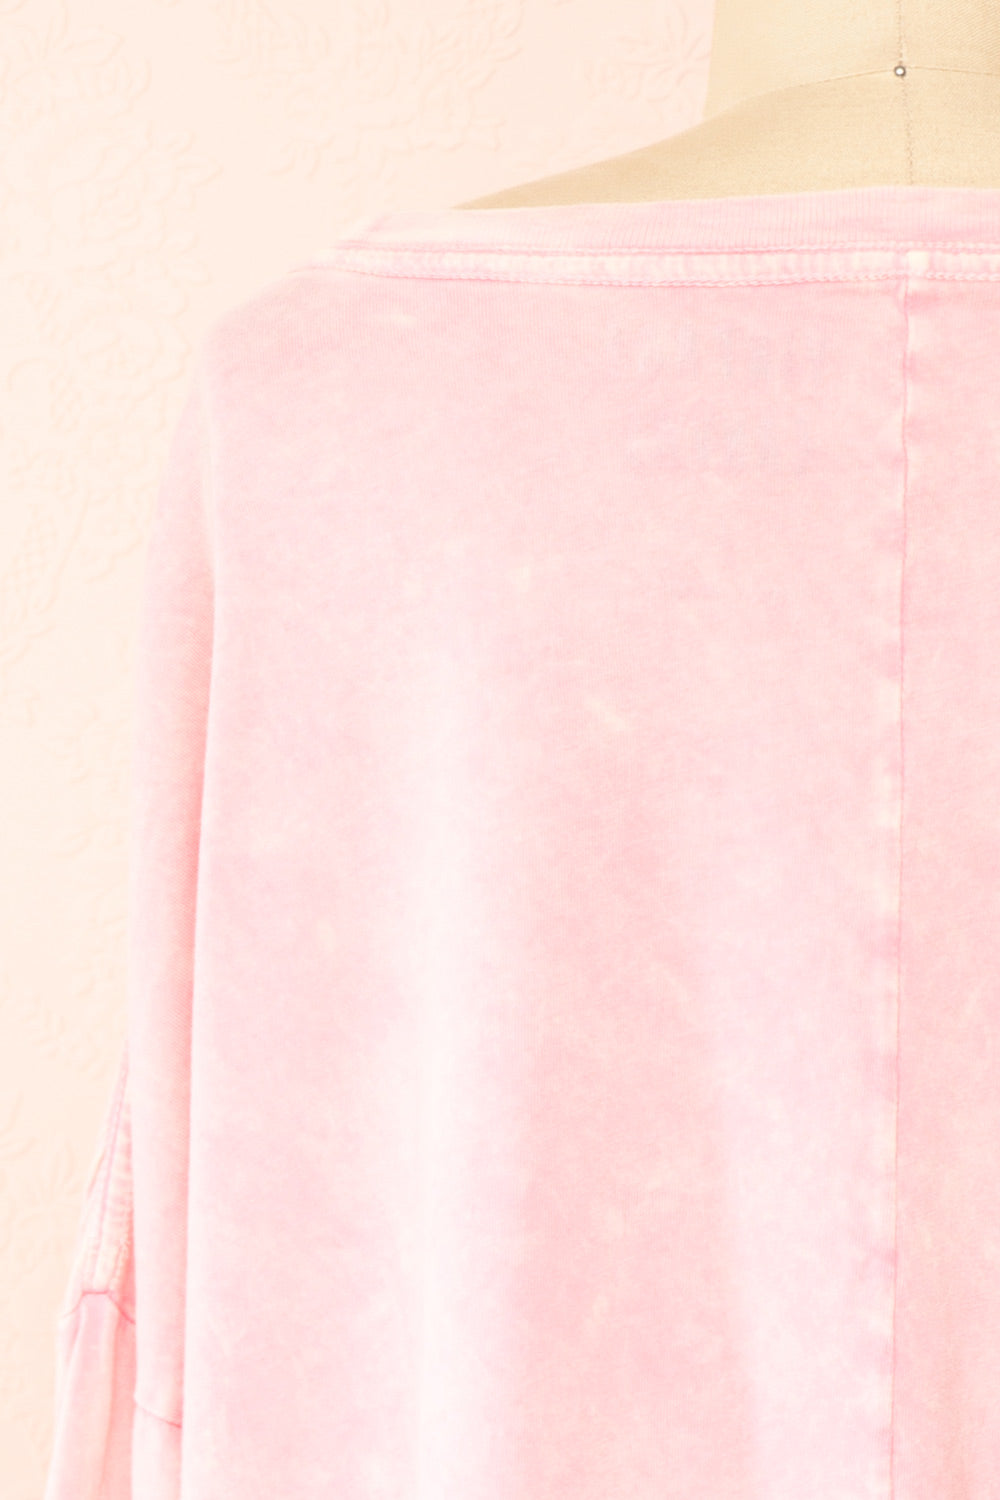 Anokia Printed Long Sleeve Shirt | Boutique 1861  back close-up